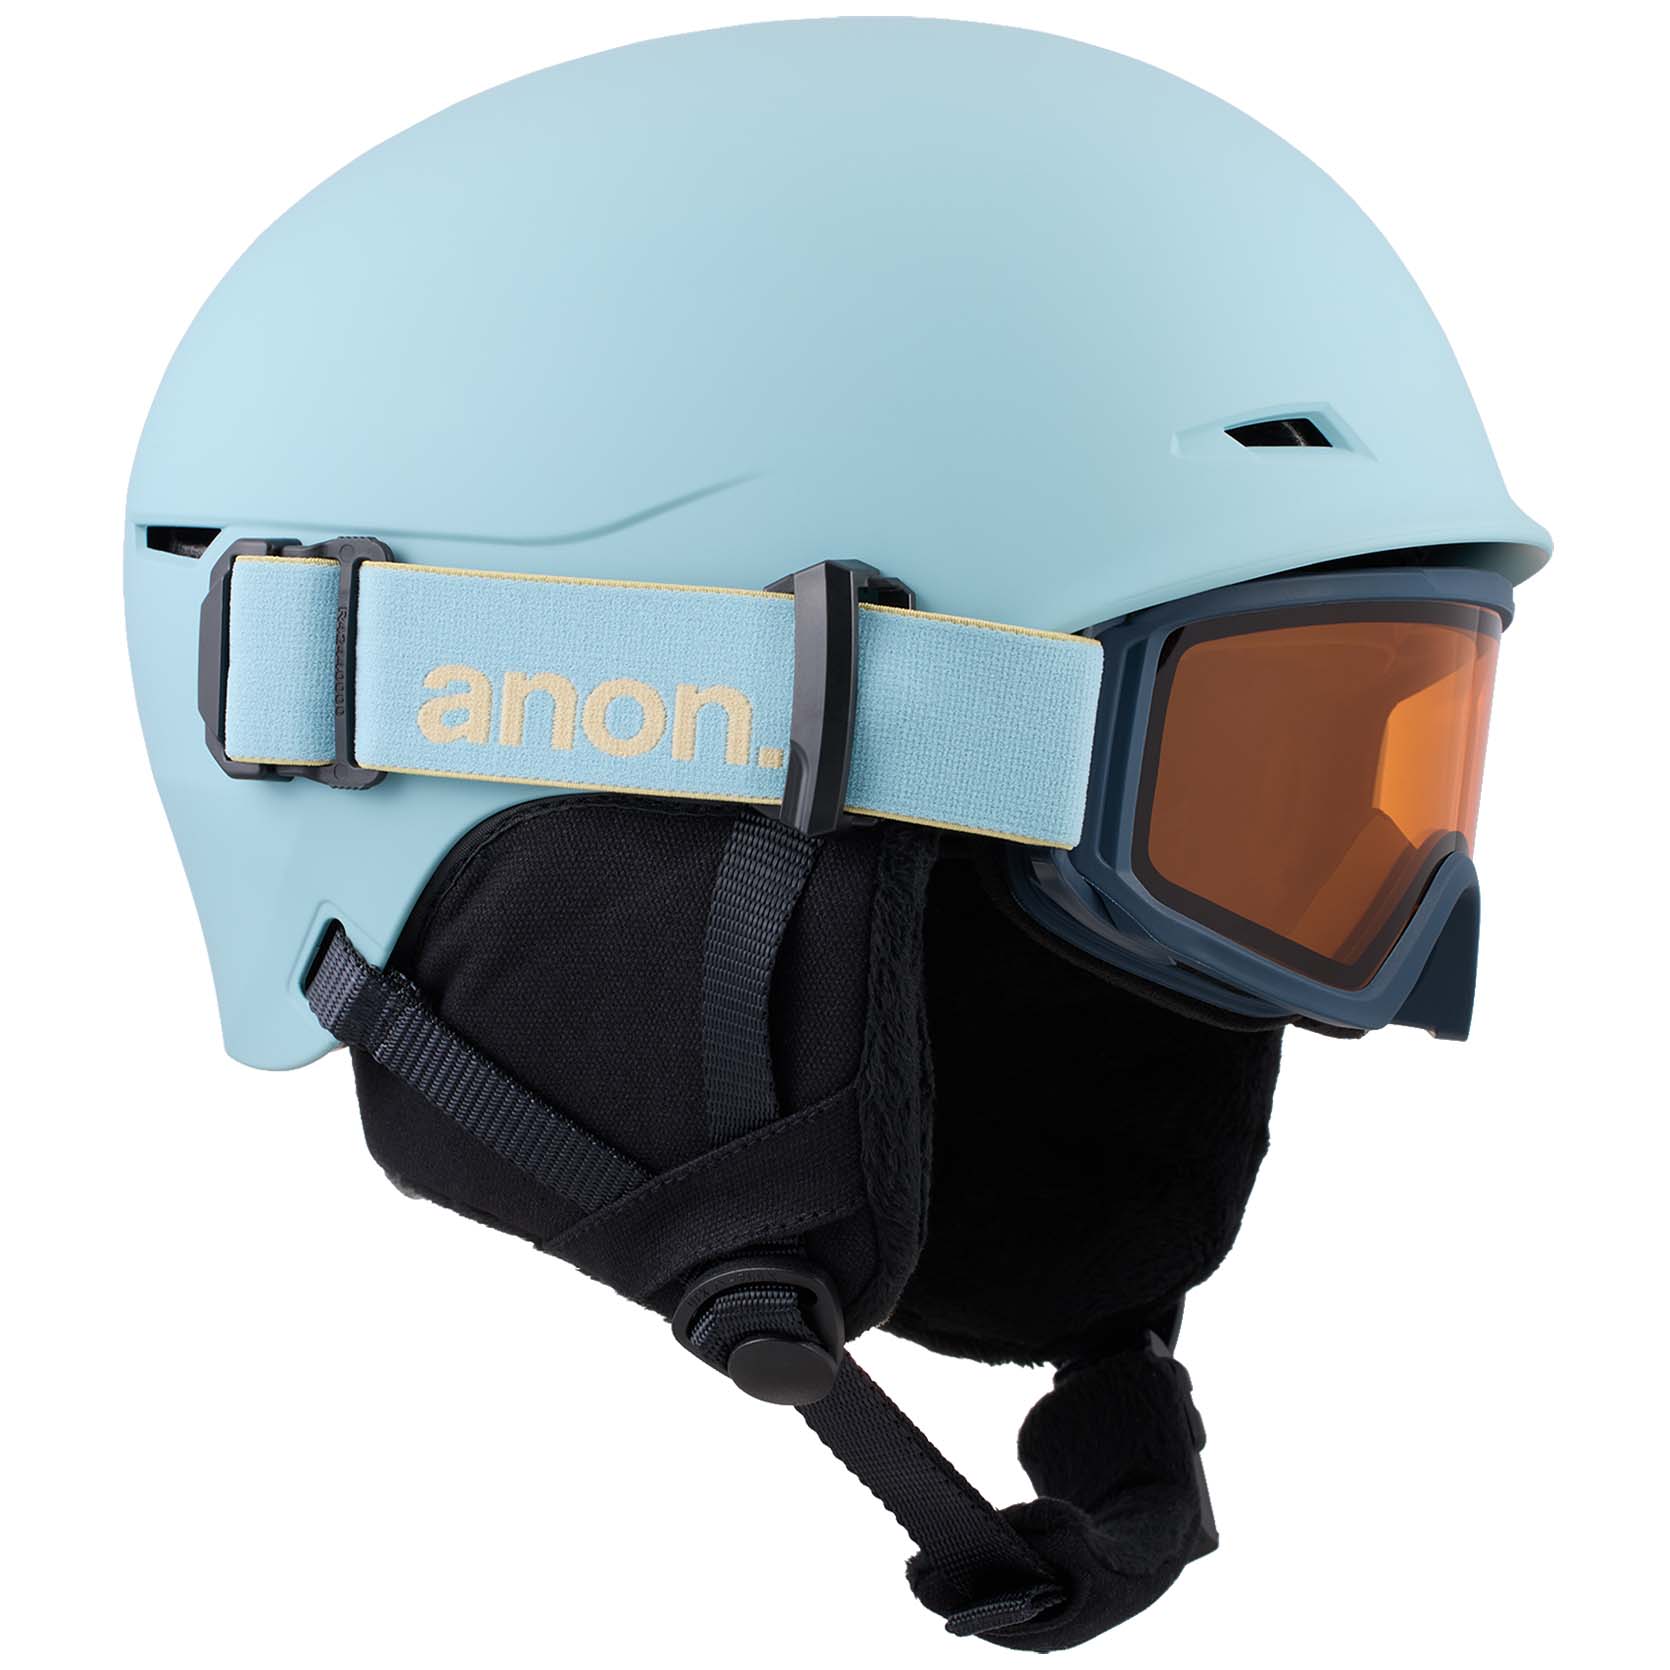 Anon Define Kids' Ski/Snowboard Helmet with Goggles